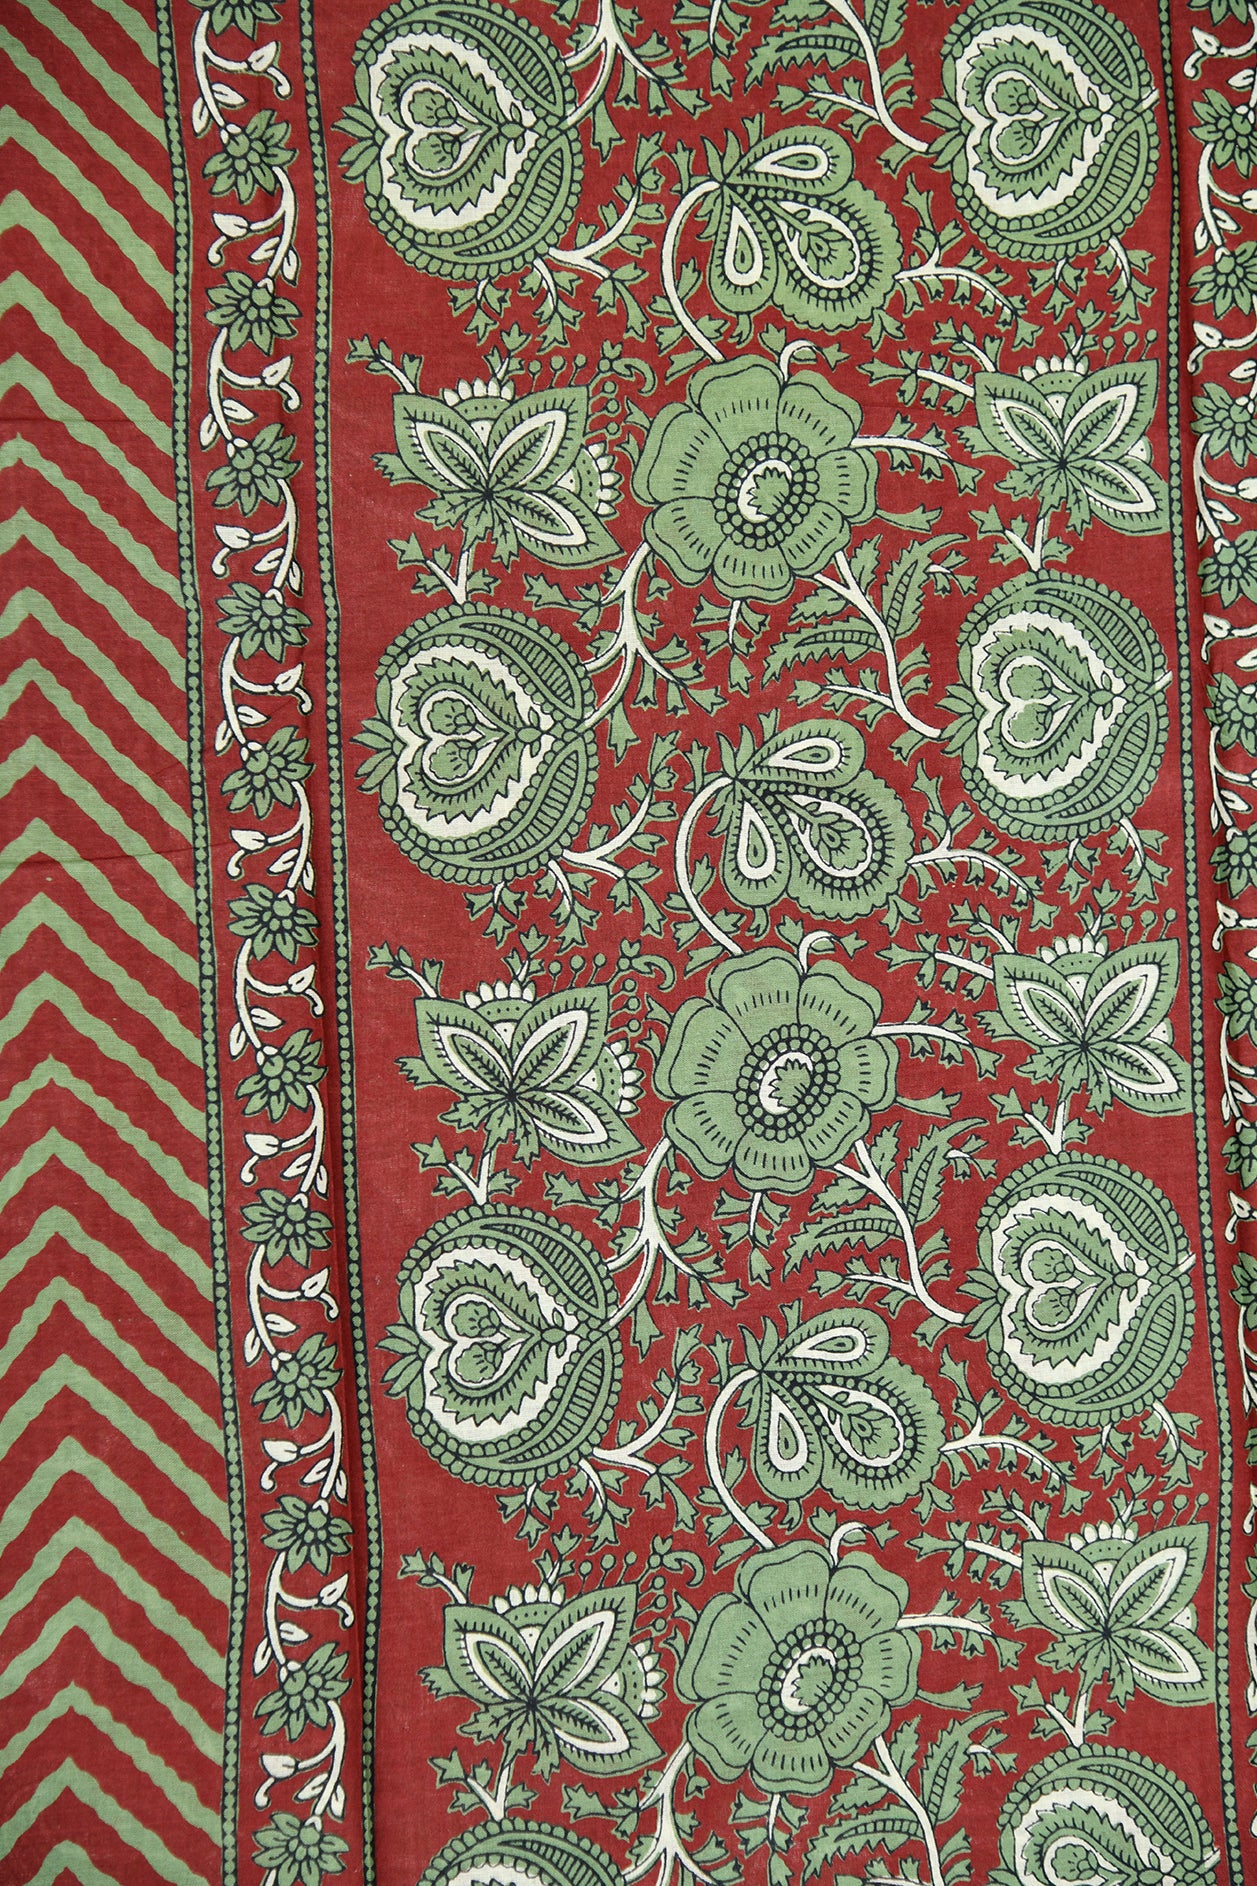 Paisley Floral Design Maroon Printed Cotton Saree